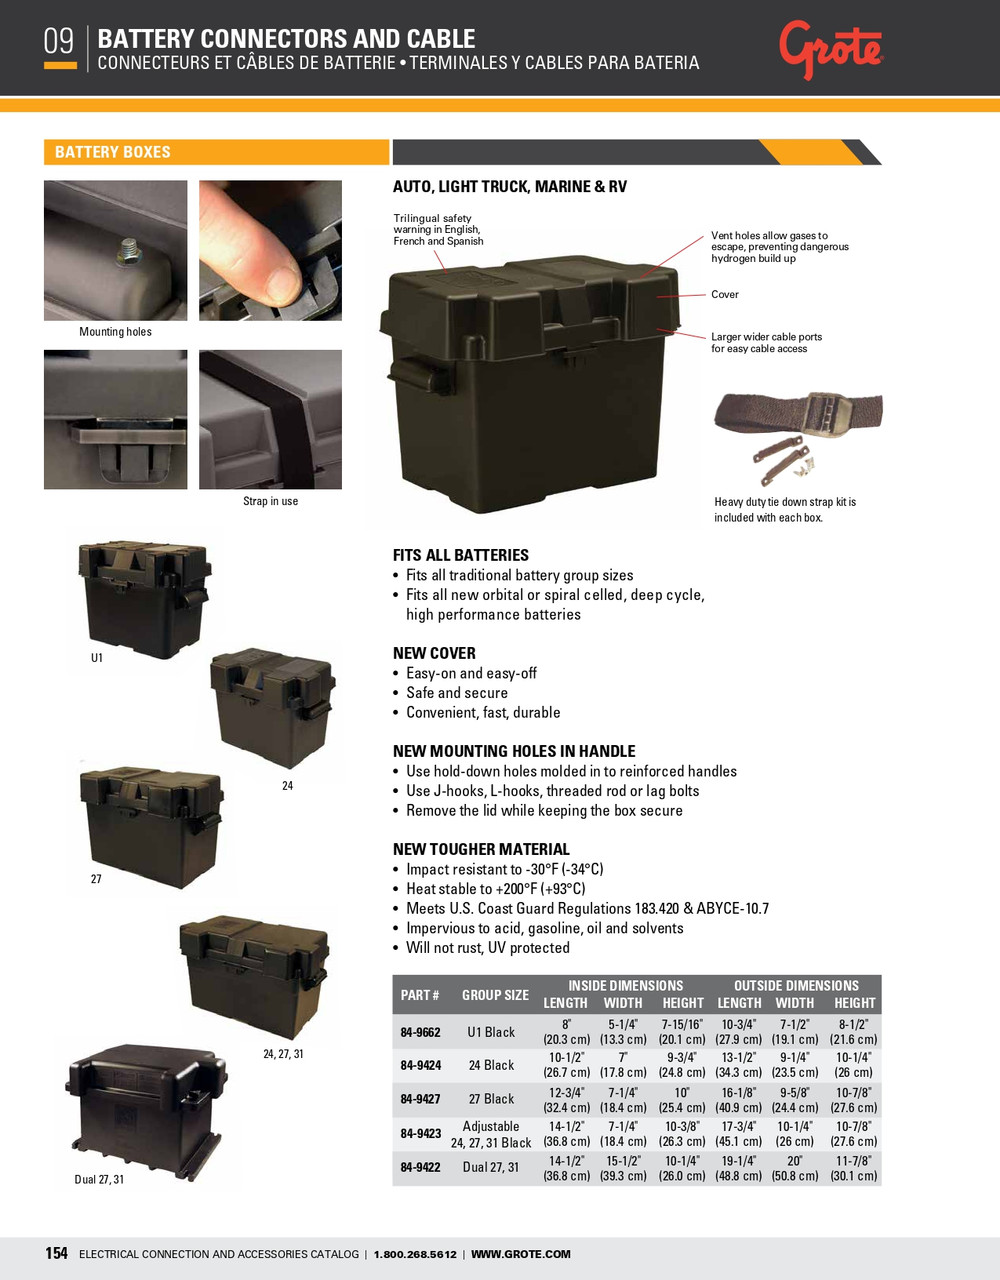 Battery Box - Group 24 - Black  84-9424